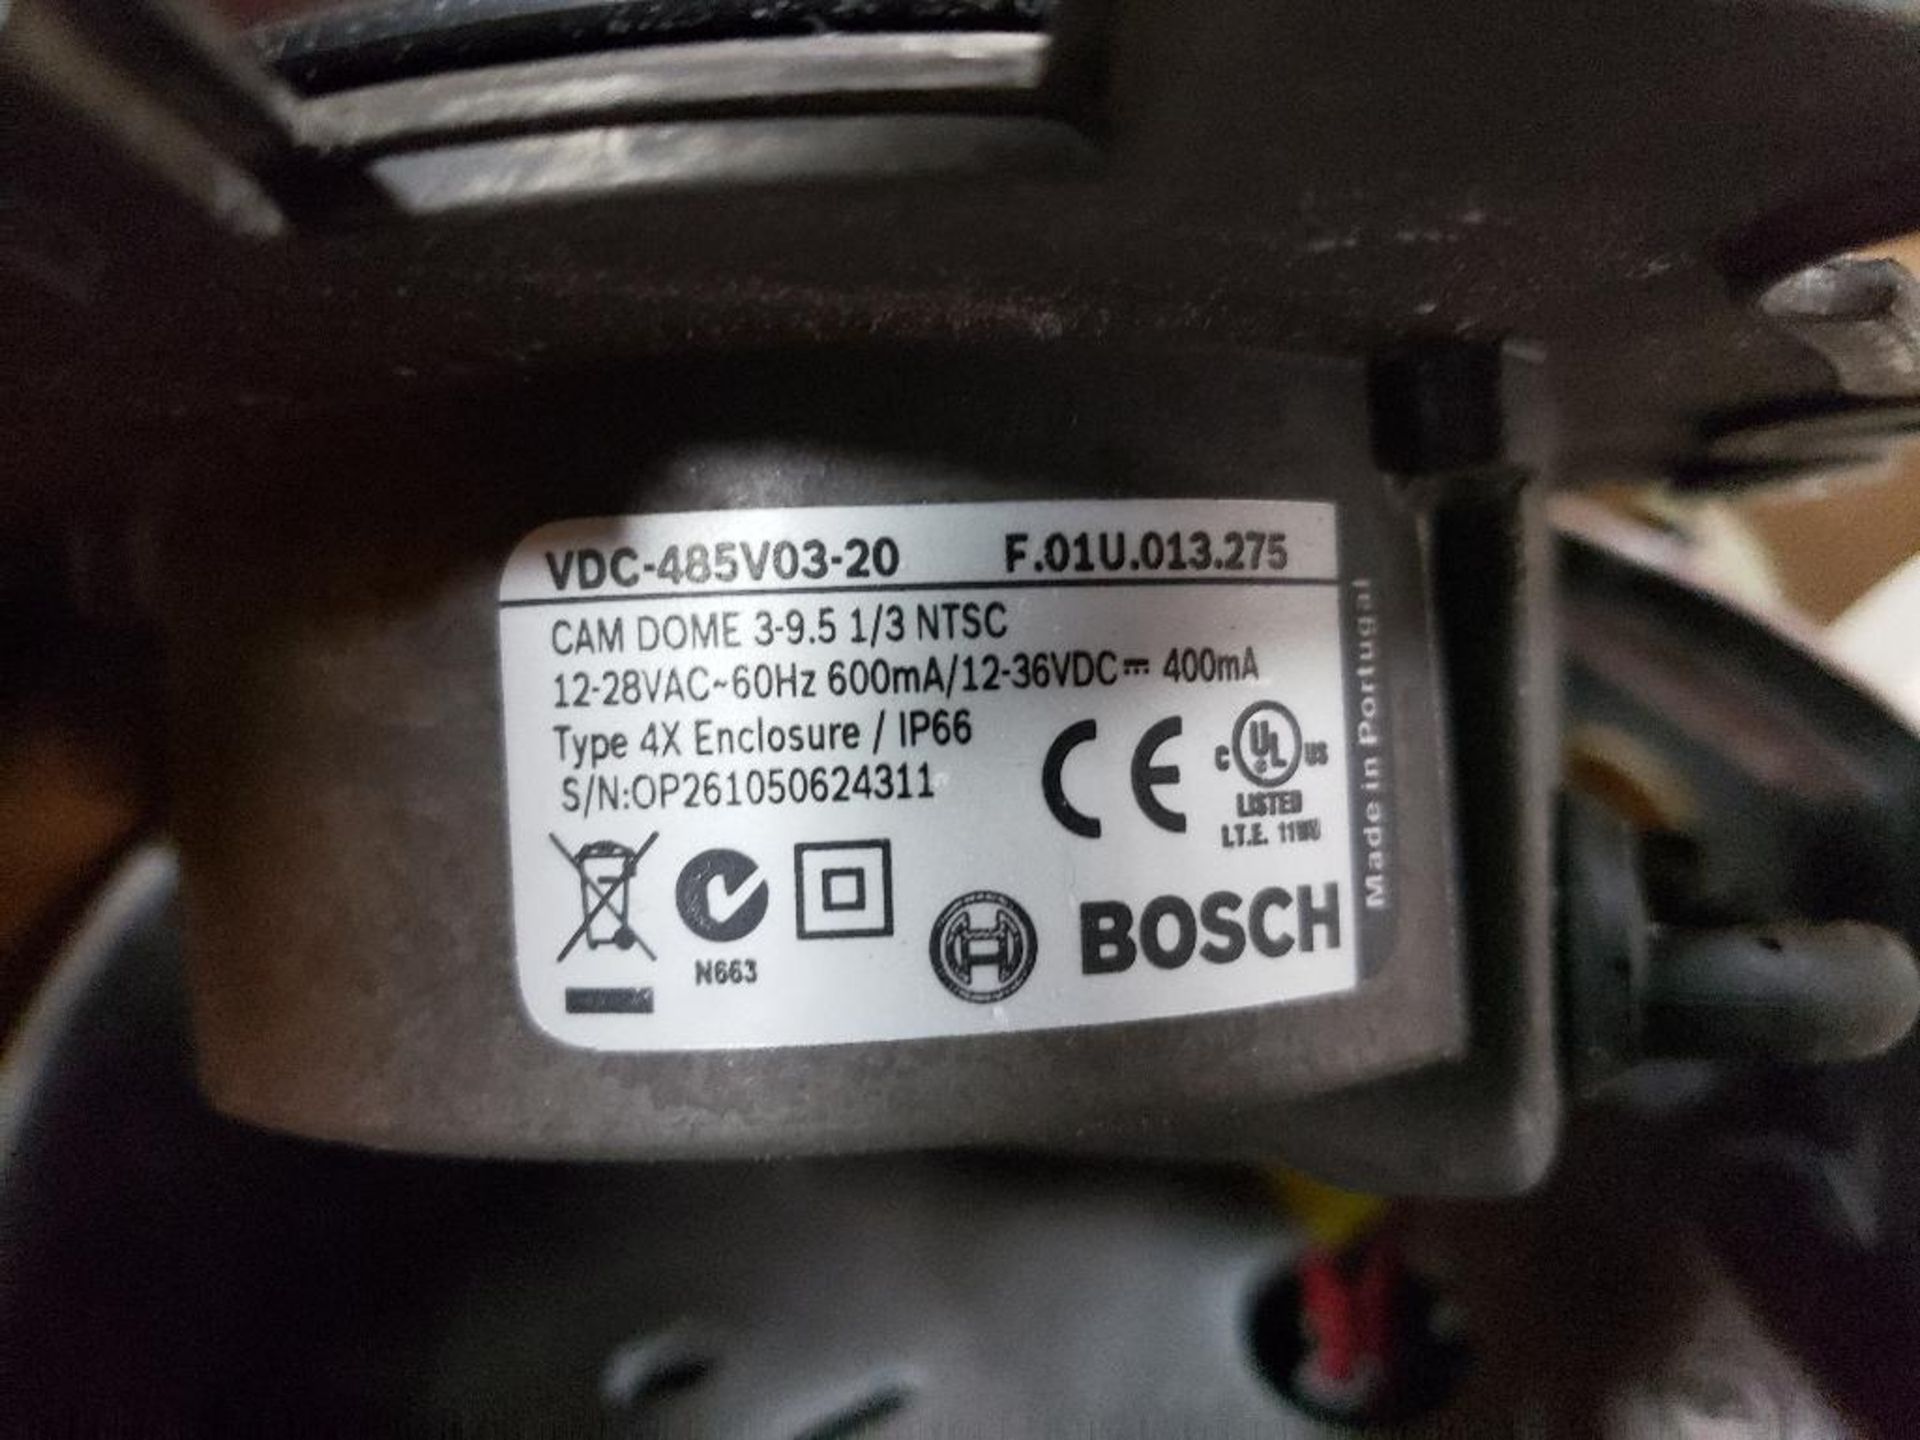 Qty 3 - Bosch security cameras. Model VCD-485V03-20. - Image 3 of 3